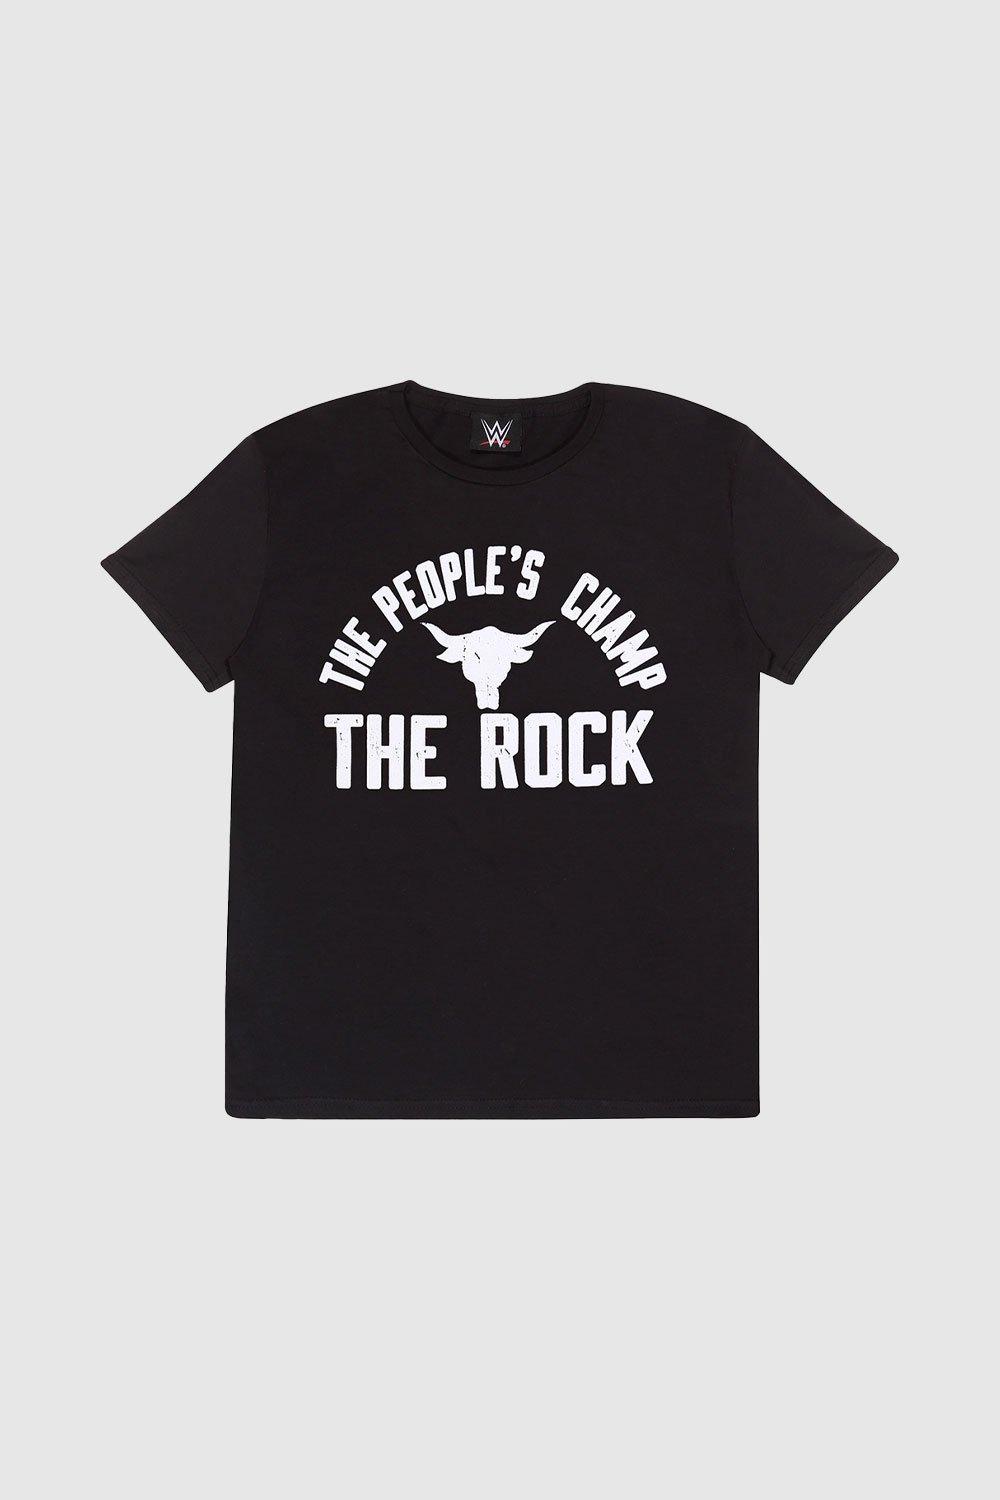 The Rock — футболка «Народный чемпион» WWE, черный фото